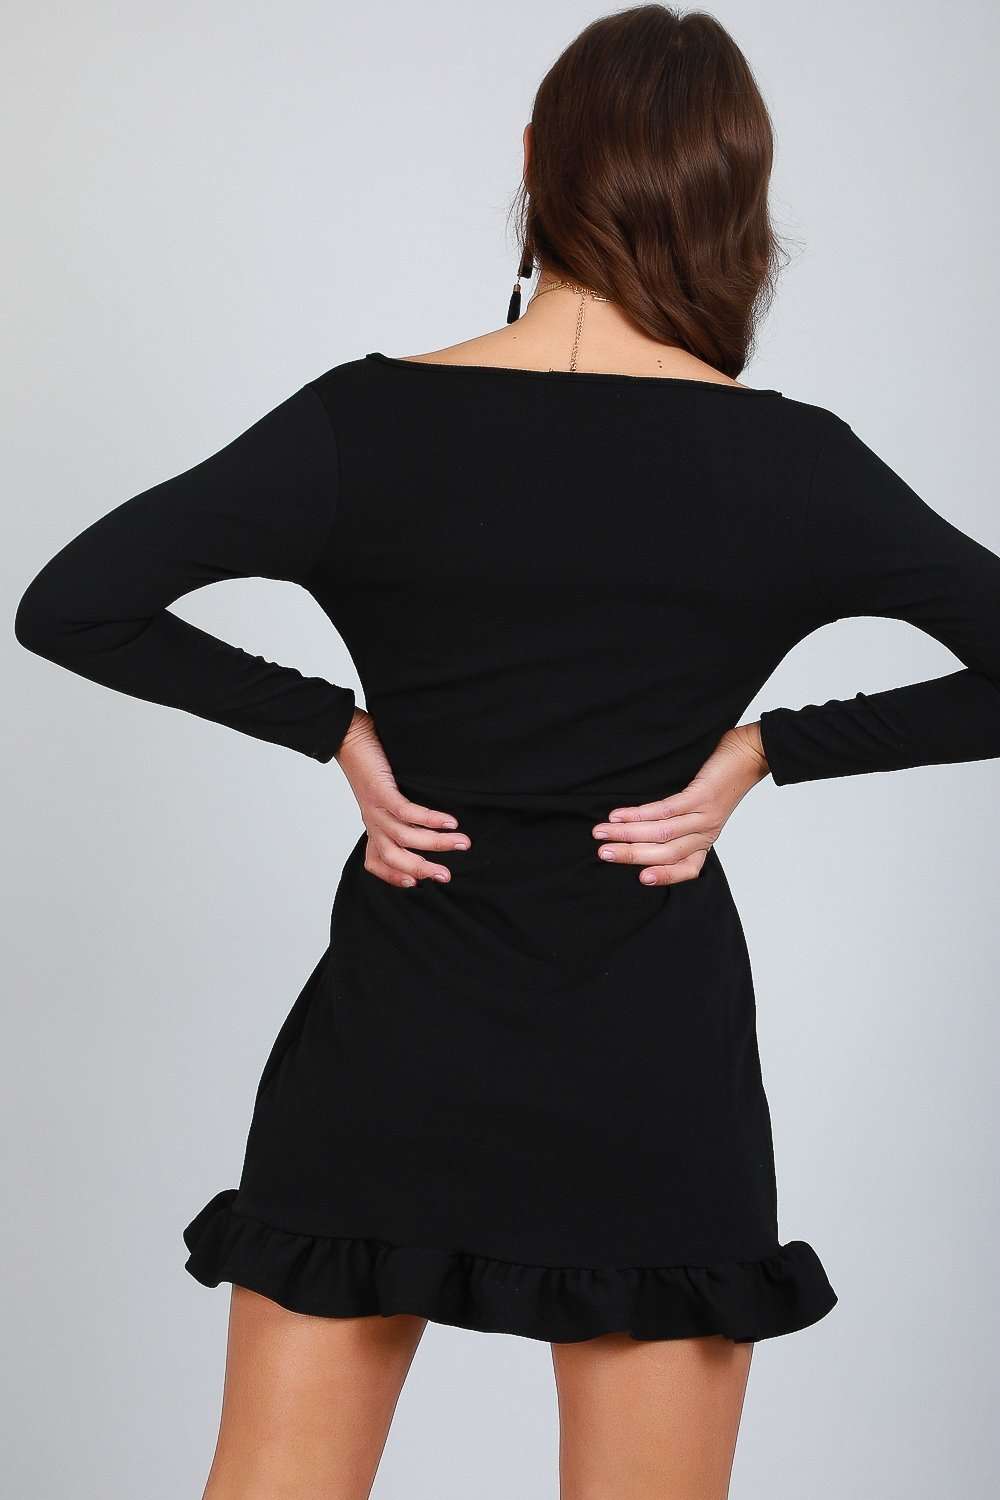 Casie Long Sleeve Frilly Mini Dress - bejealous-com